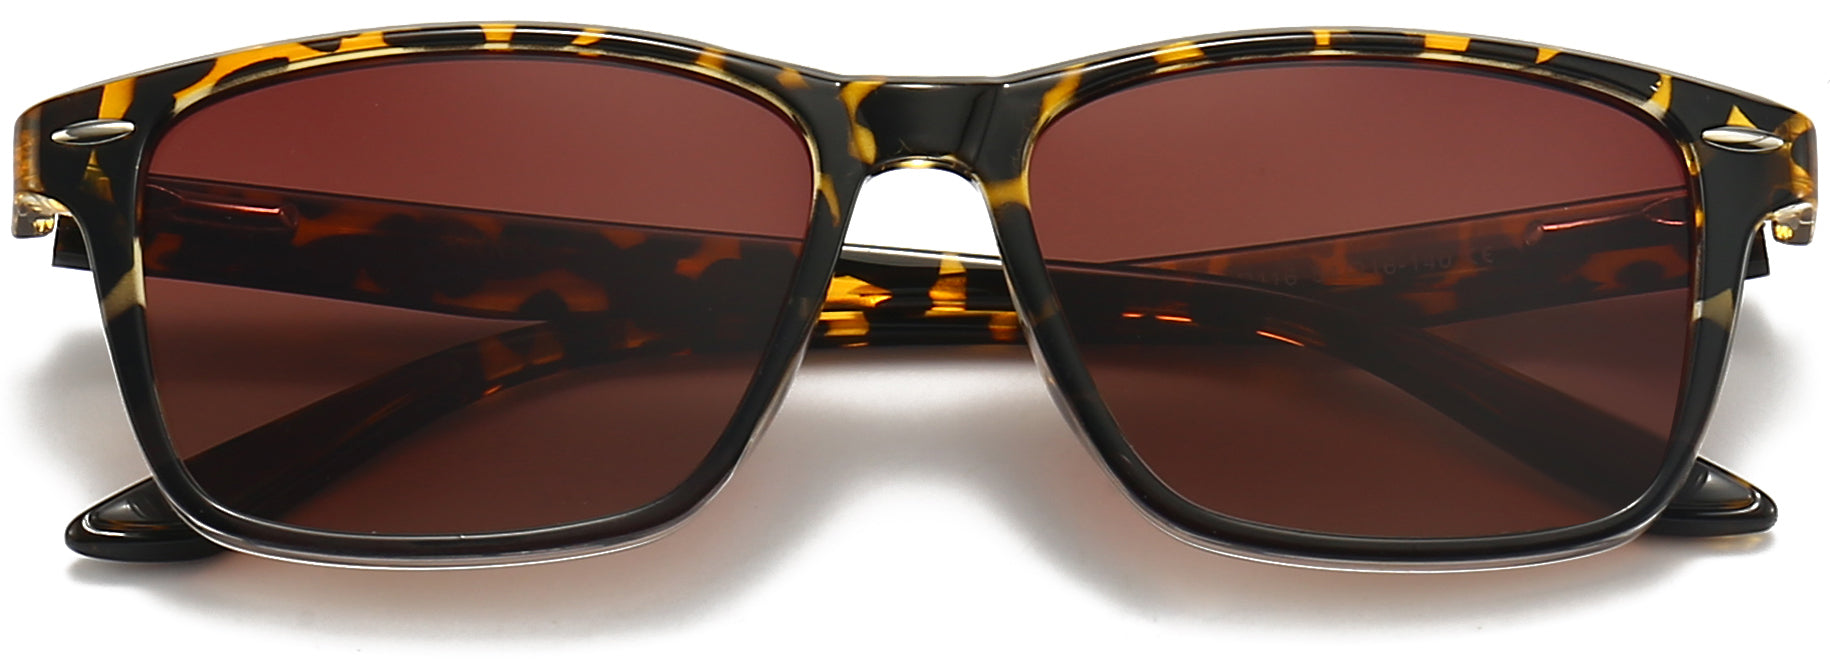 Faith Tortoise Sunglasses from ANRRI